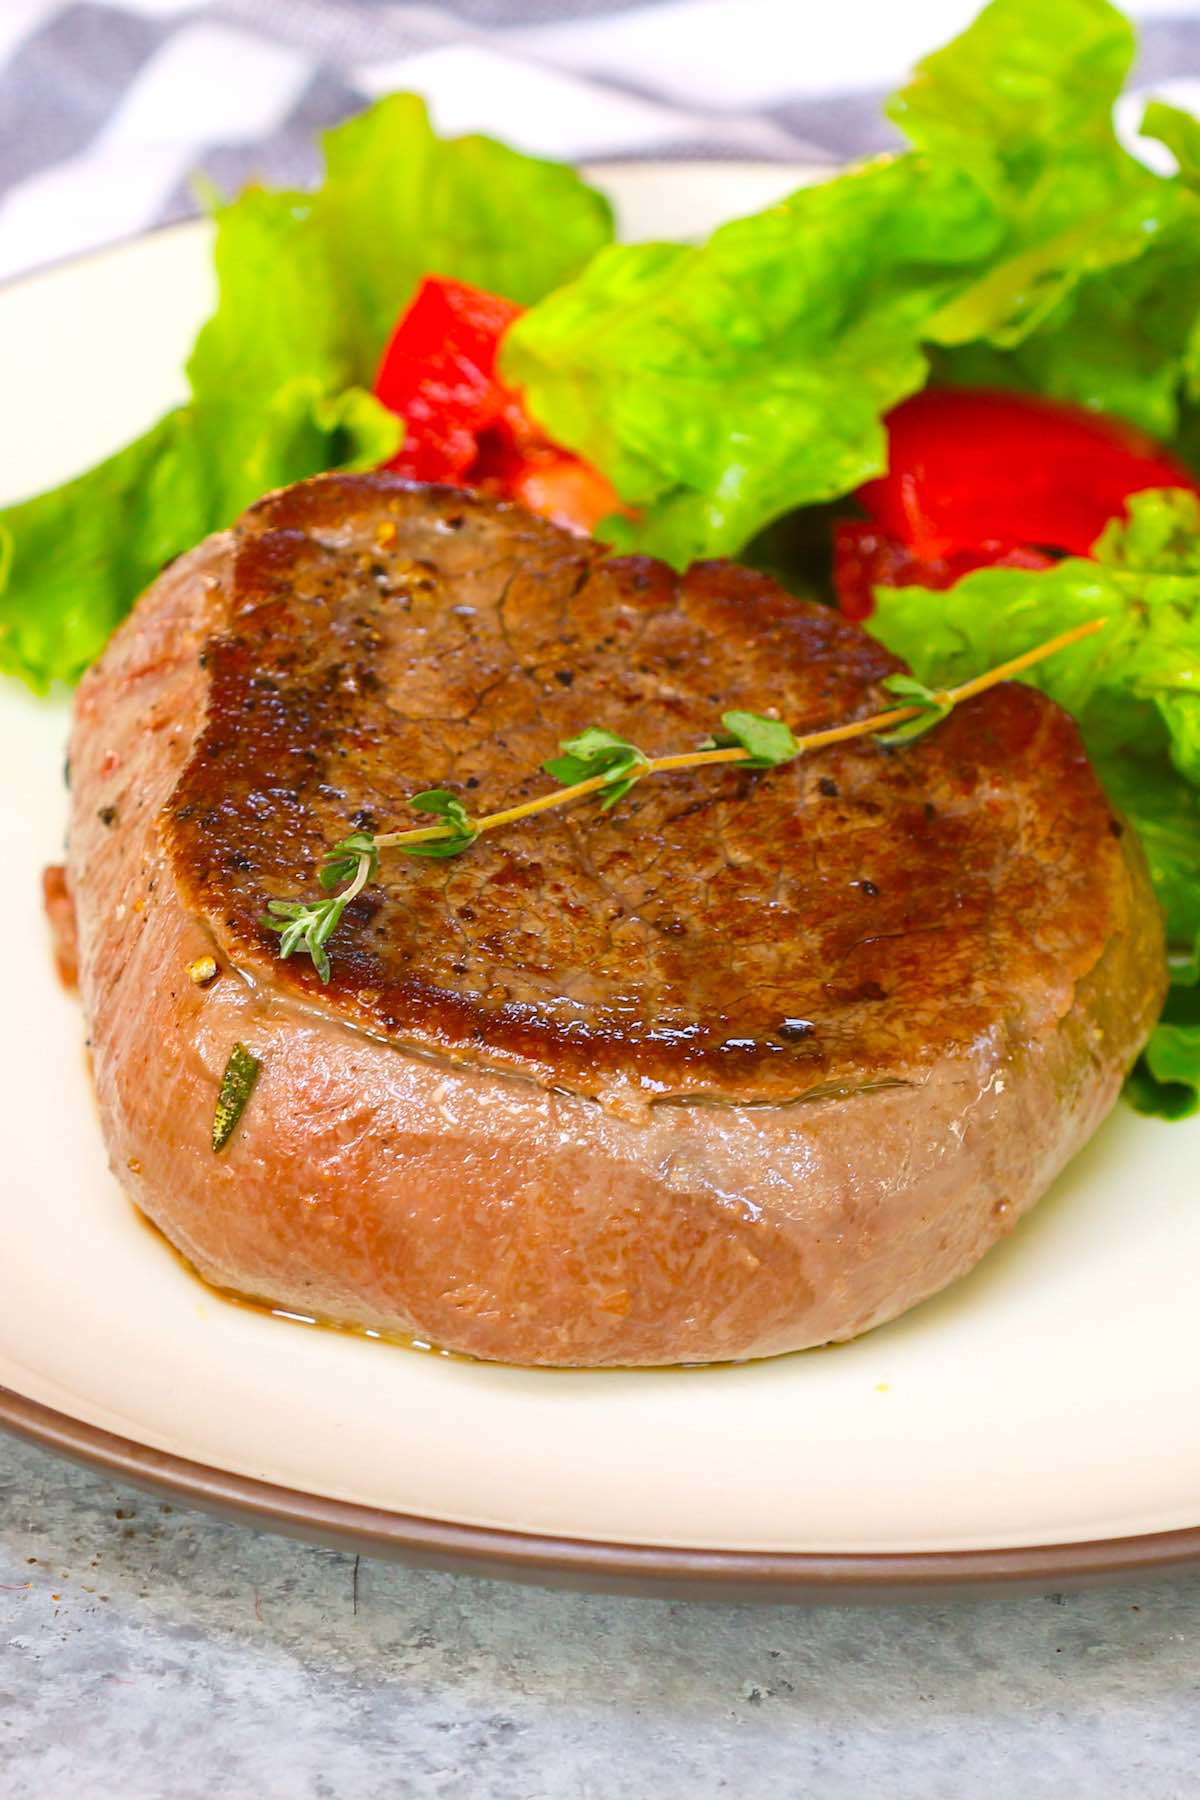 Tenderloin steak served with a side salad